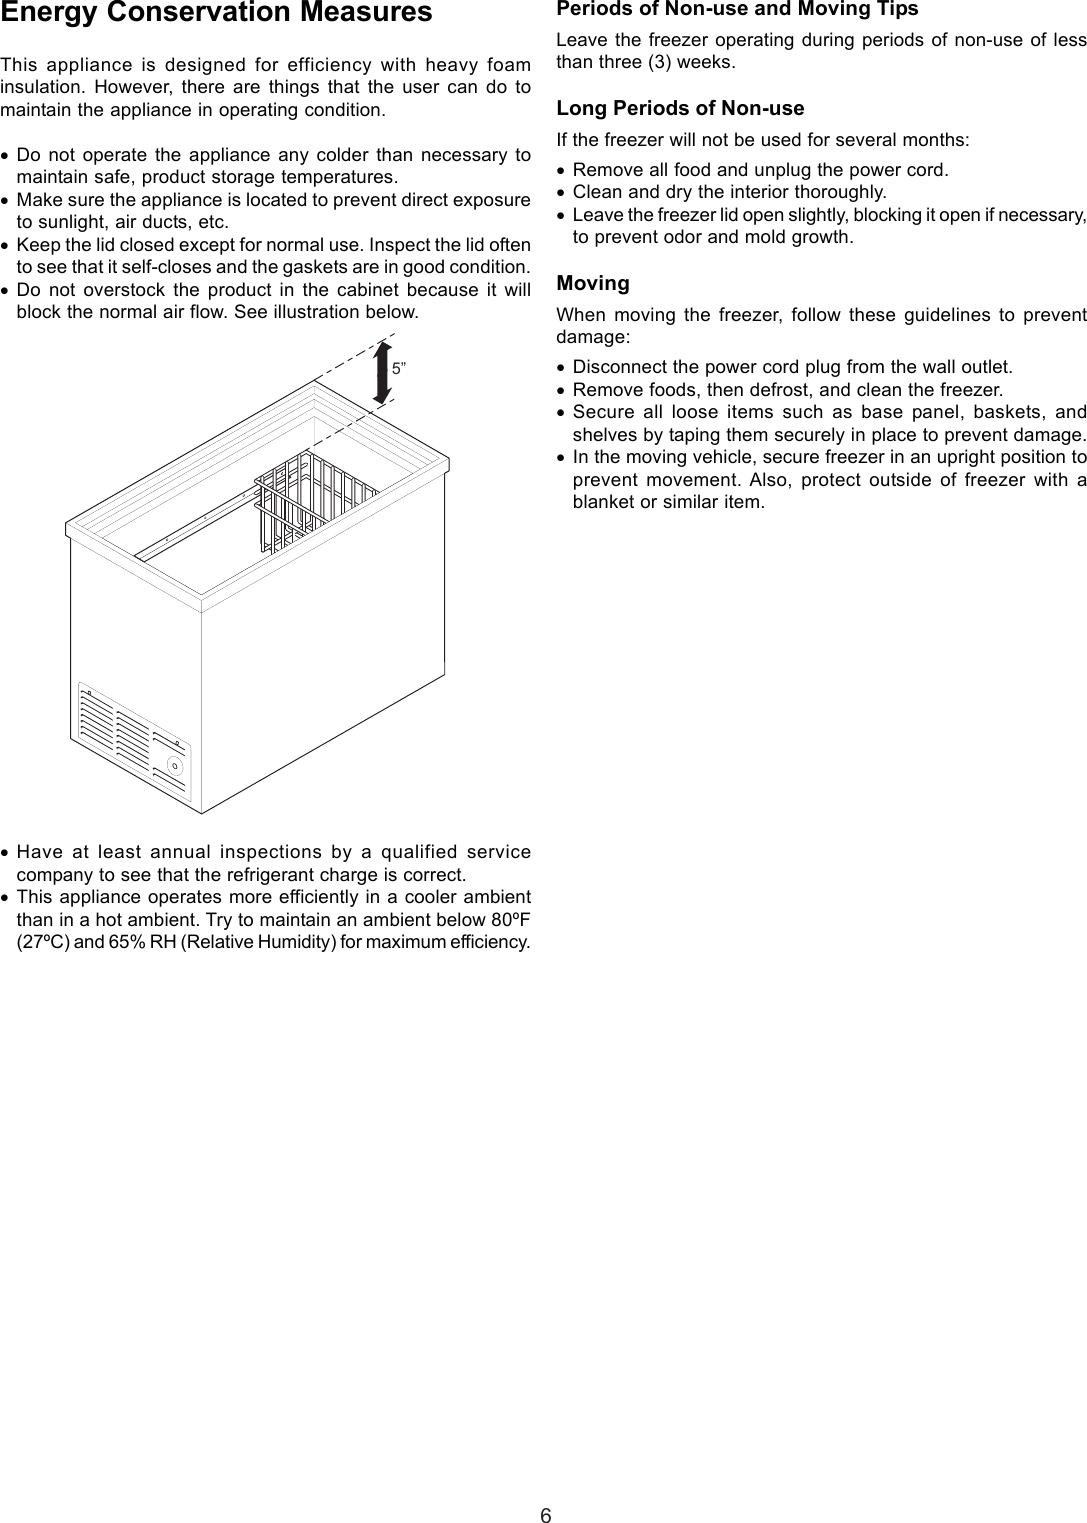 Page 6 of 11 - Frigidaire Frigidaire-7-Cf-Chest-Freezer-297068500-Users-Manual- 297068500  Frigidaire-7-cf-chest-freezer-297068500-users-manual